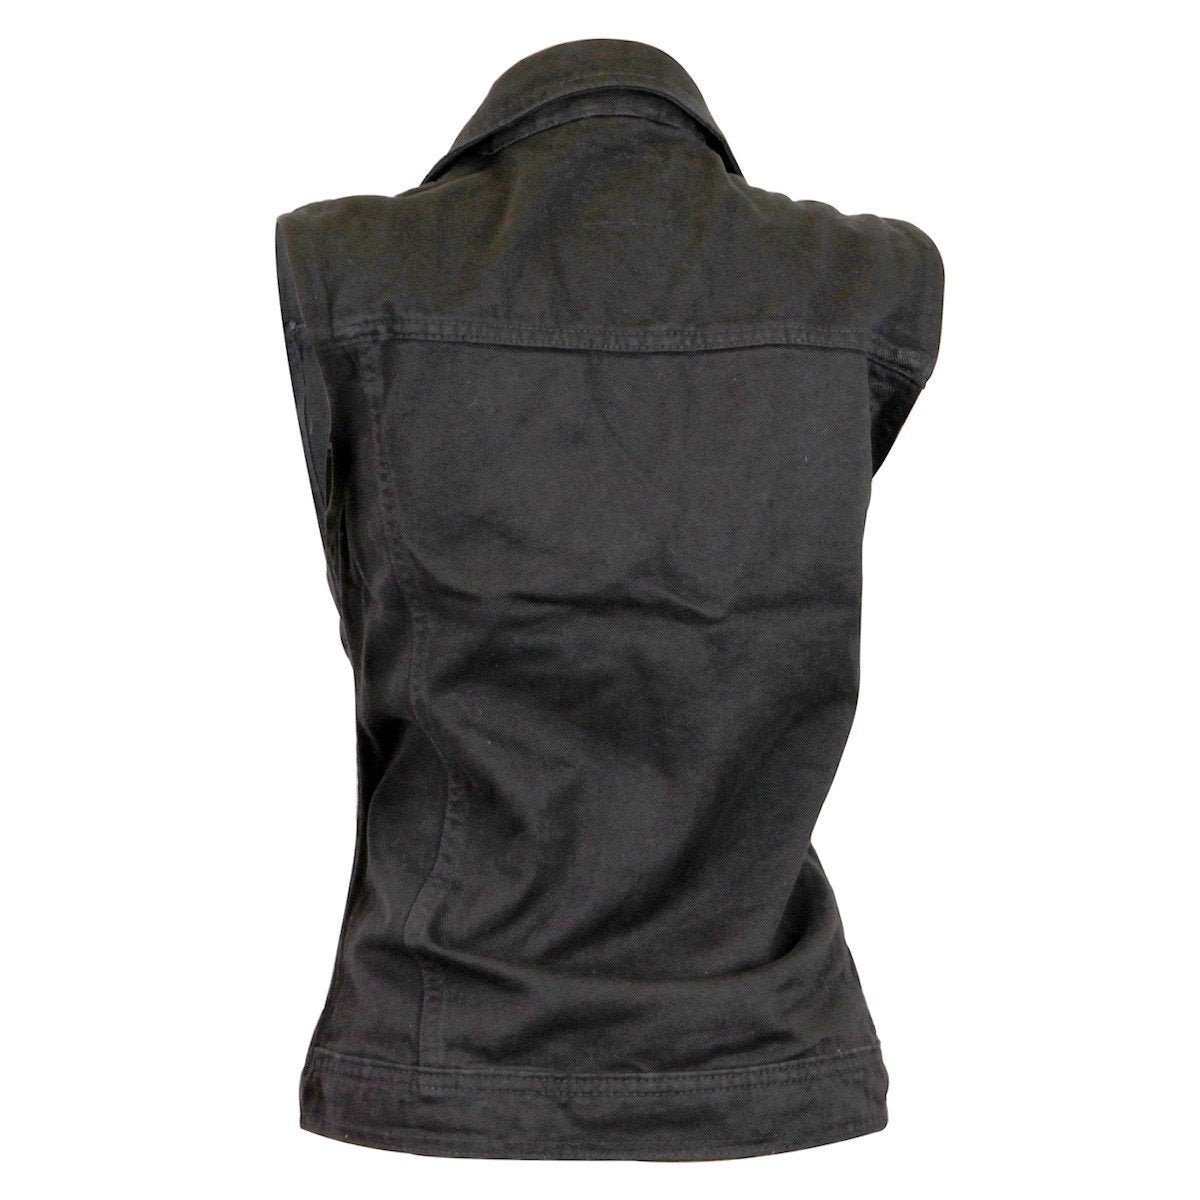 Vance Leather Women's Denim Vest with Studded Collar